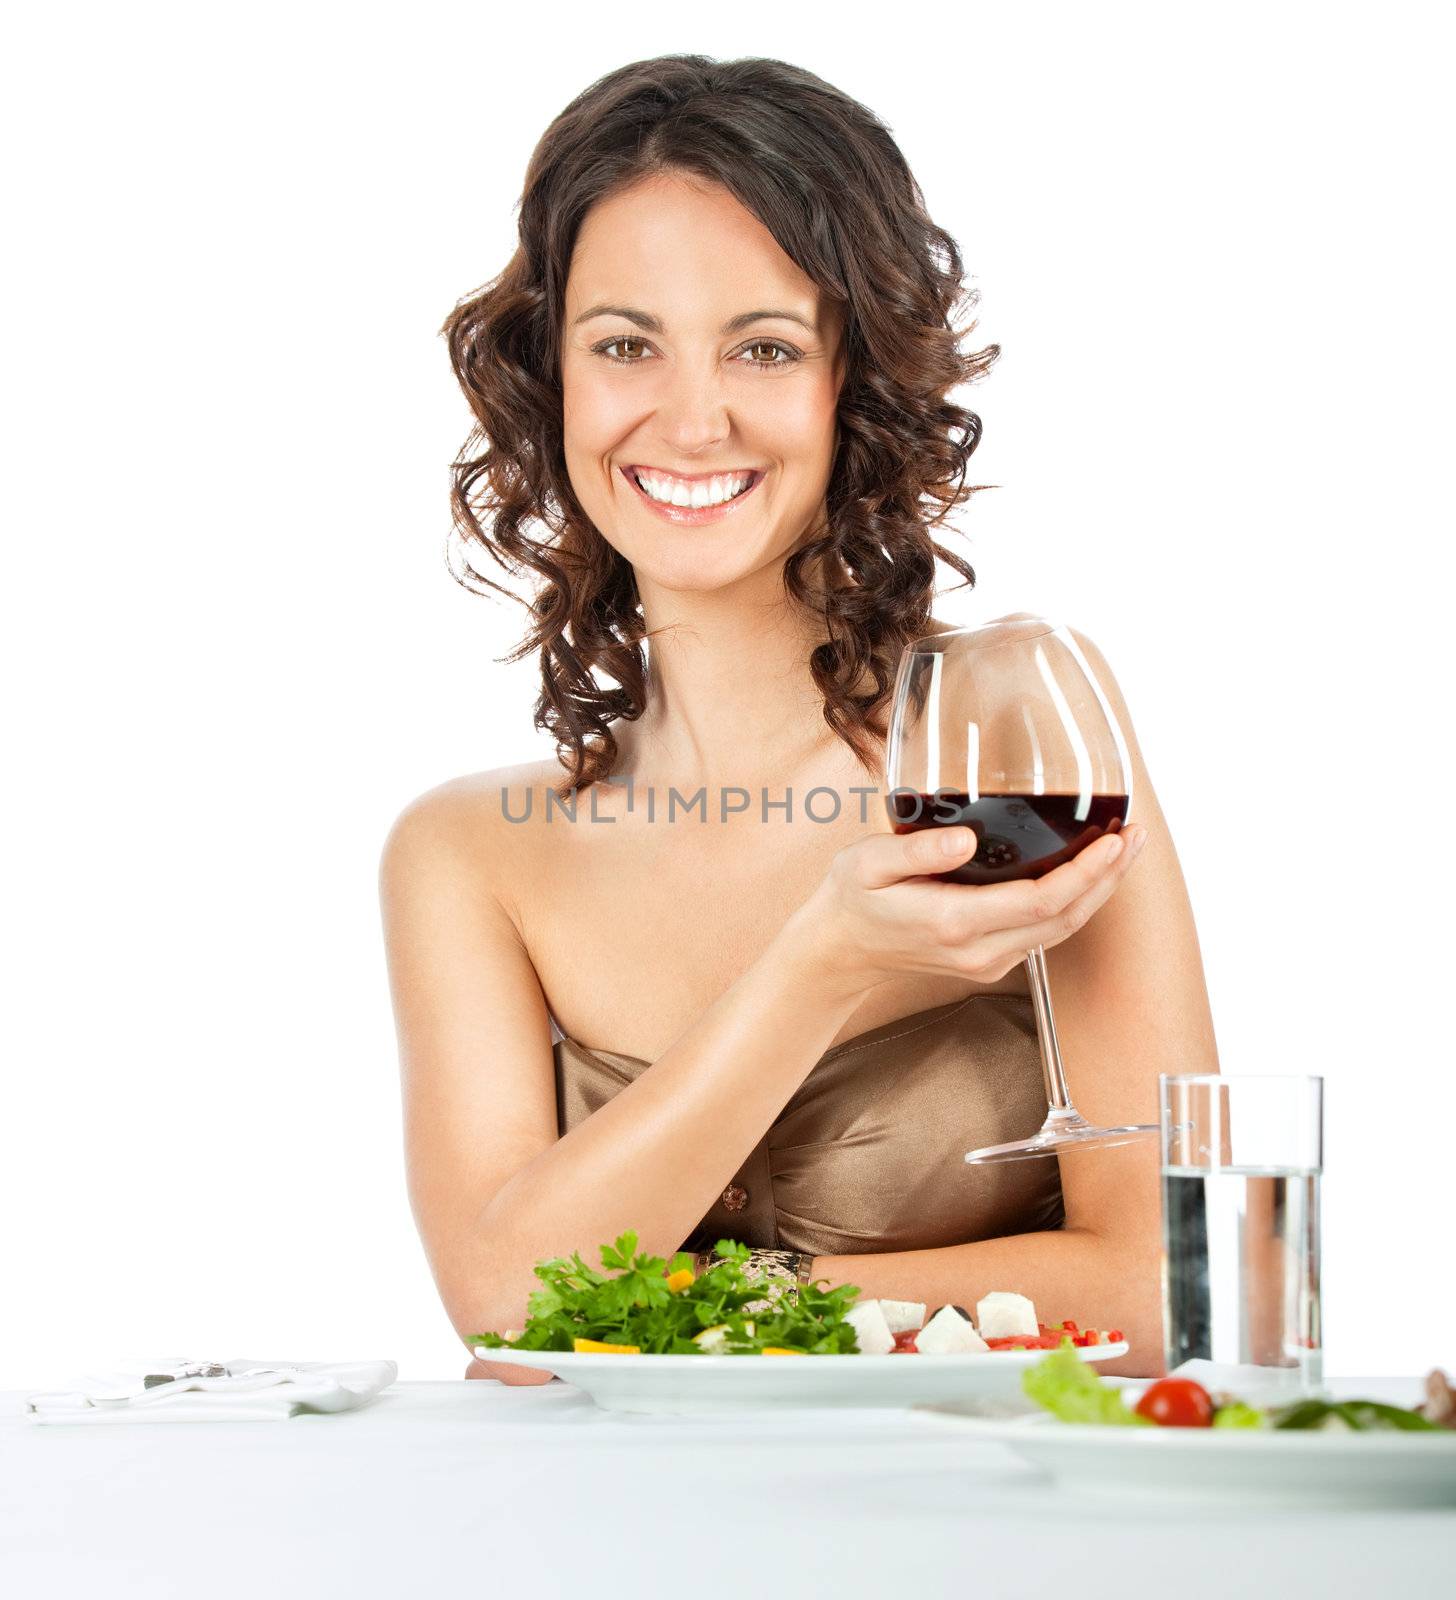 Woman glass of wine by vilevi